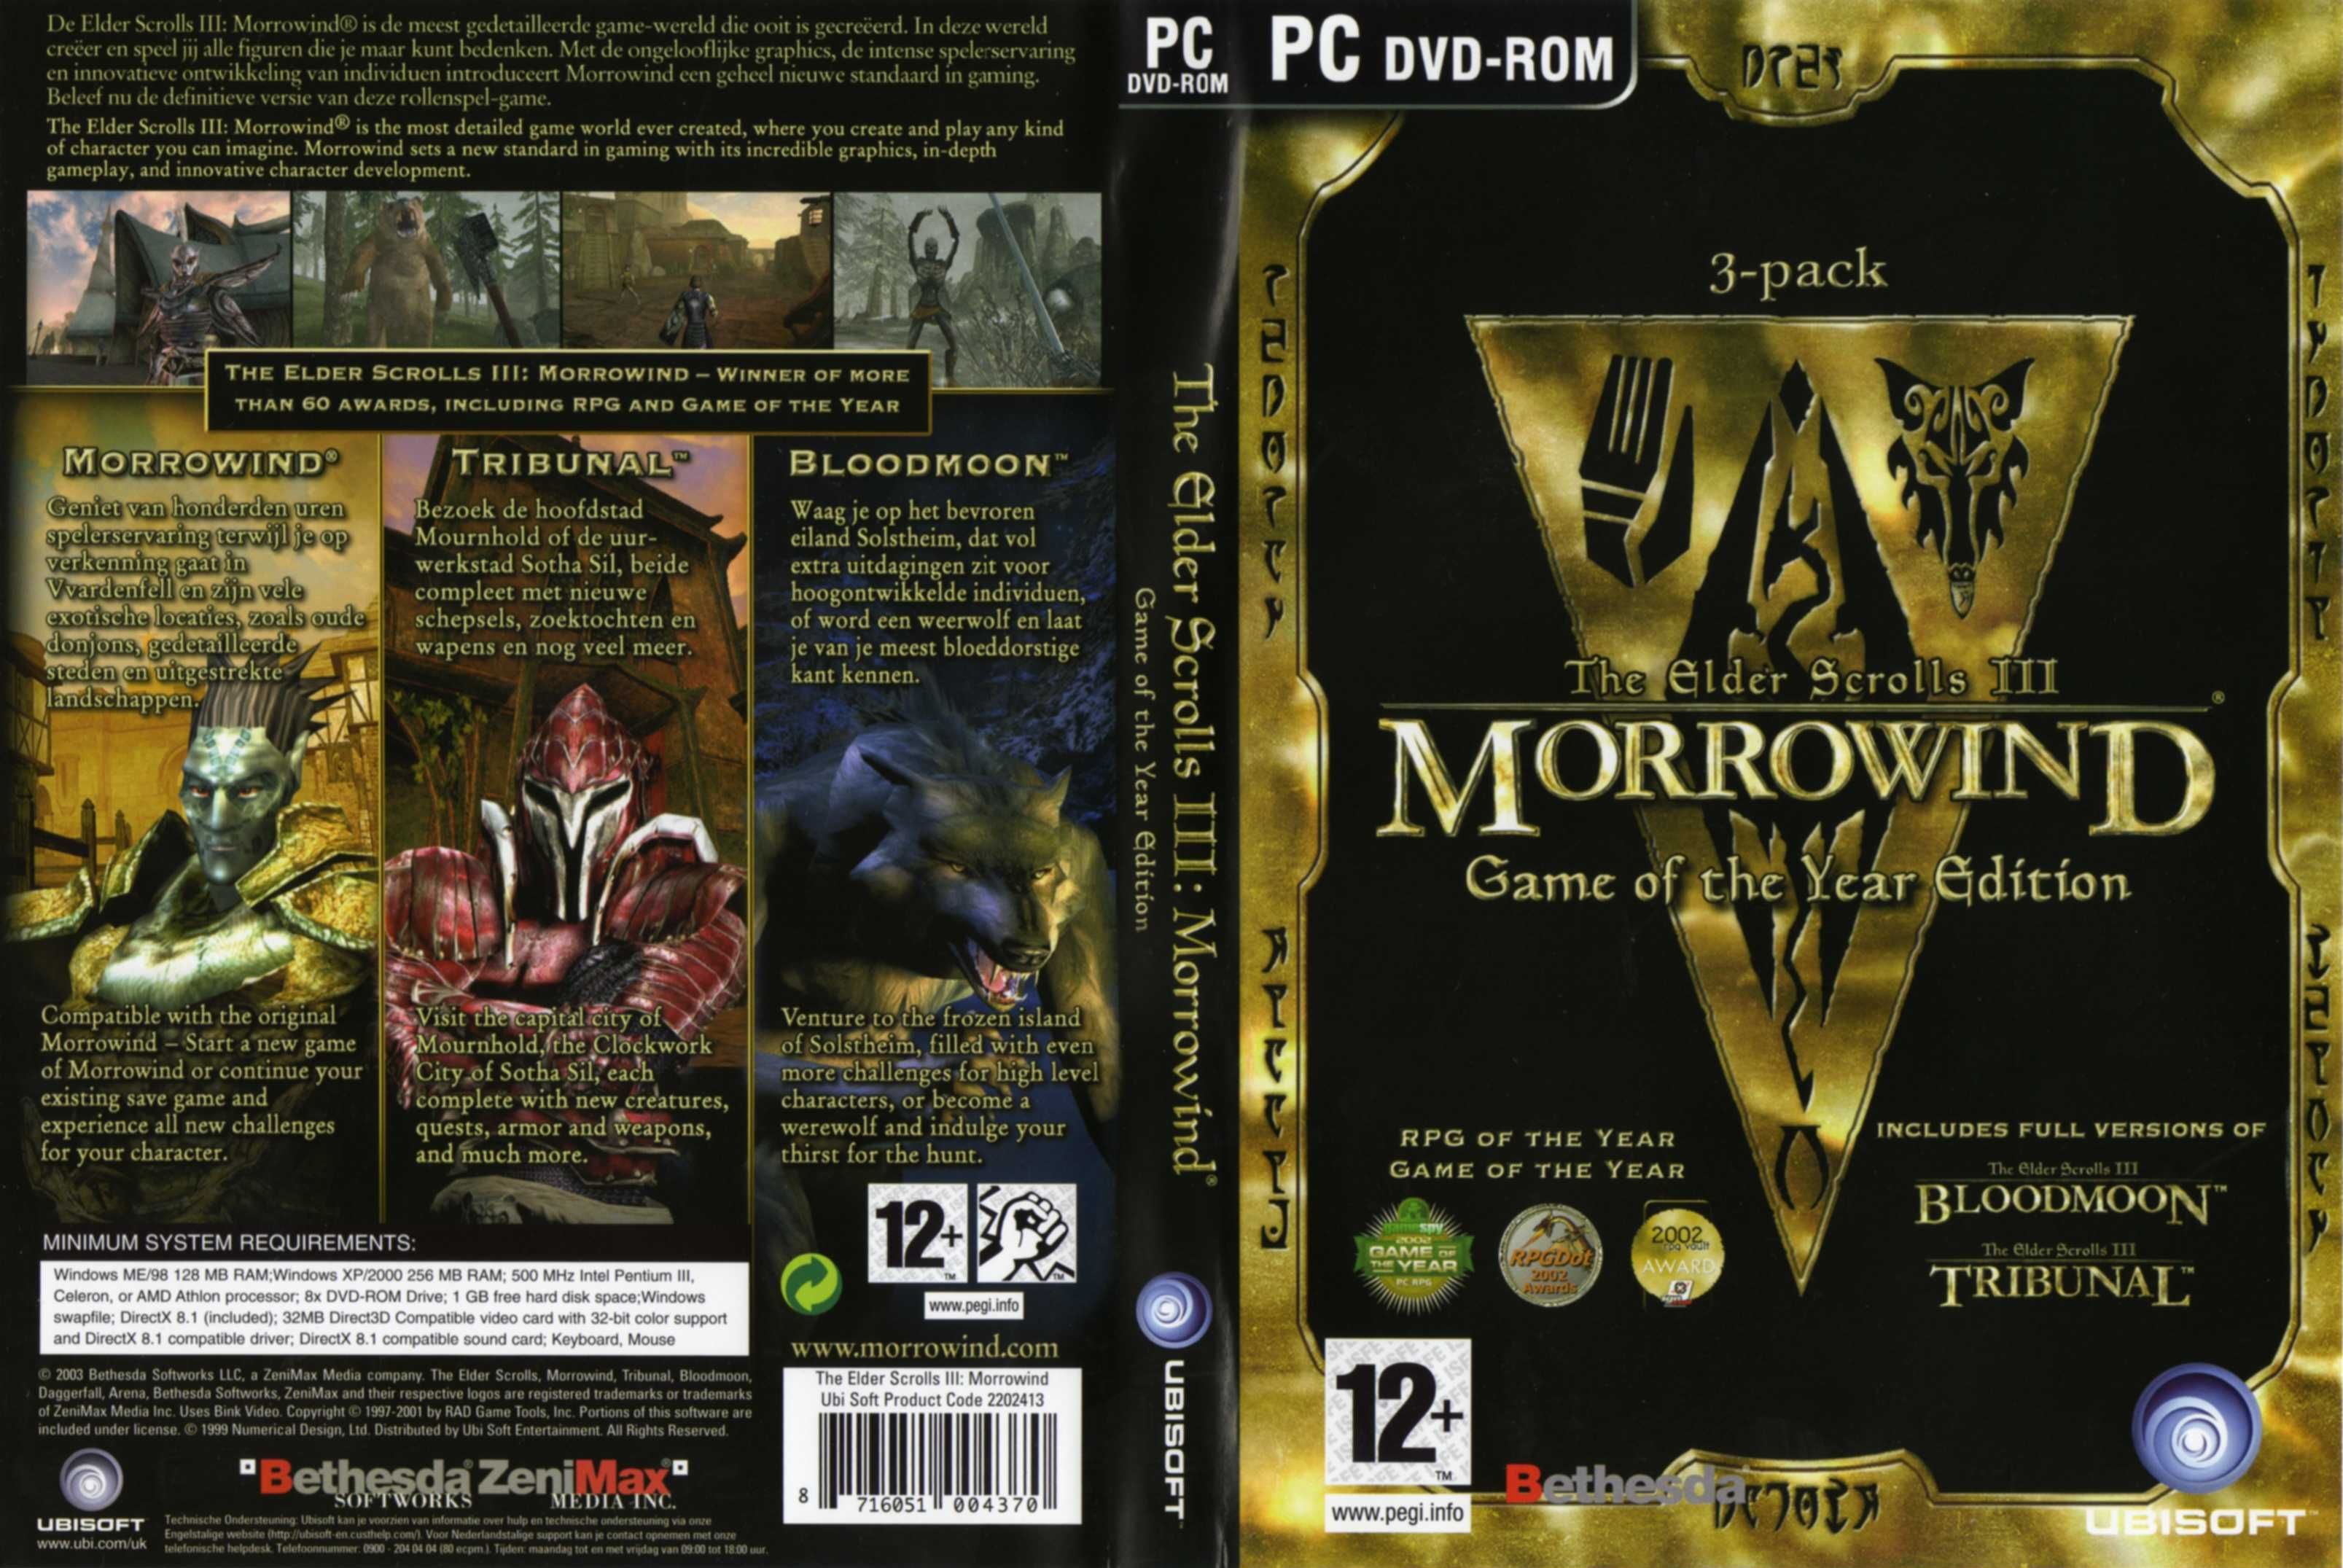 The Elder Scrolls III: Morrowind Game of the Year Edition (RUS) [Repack]